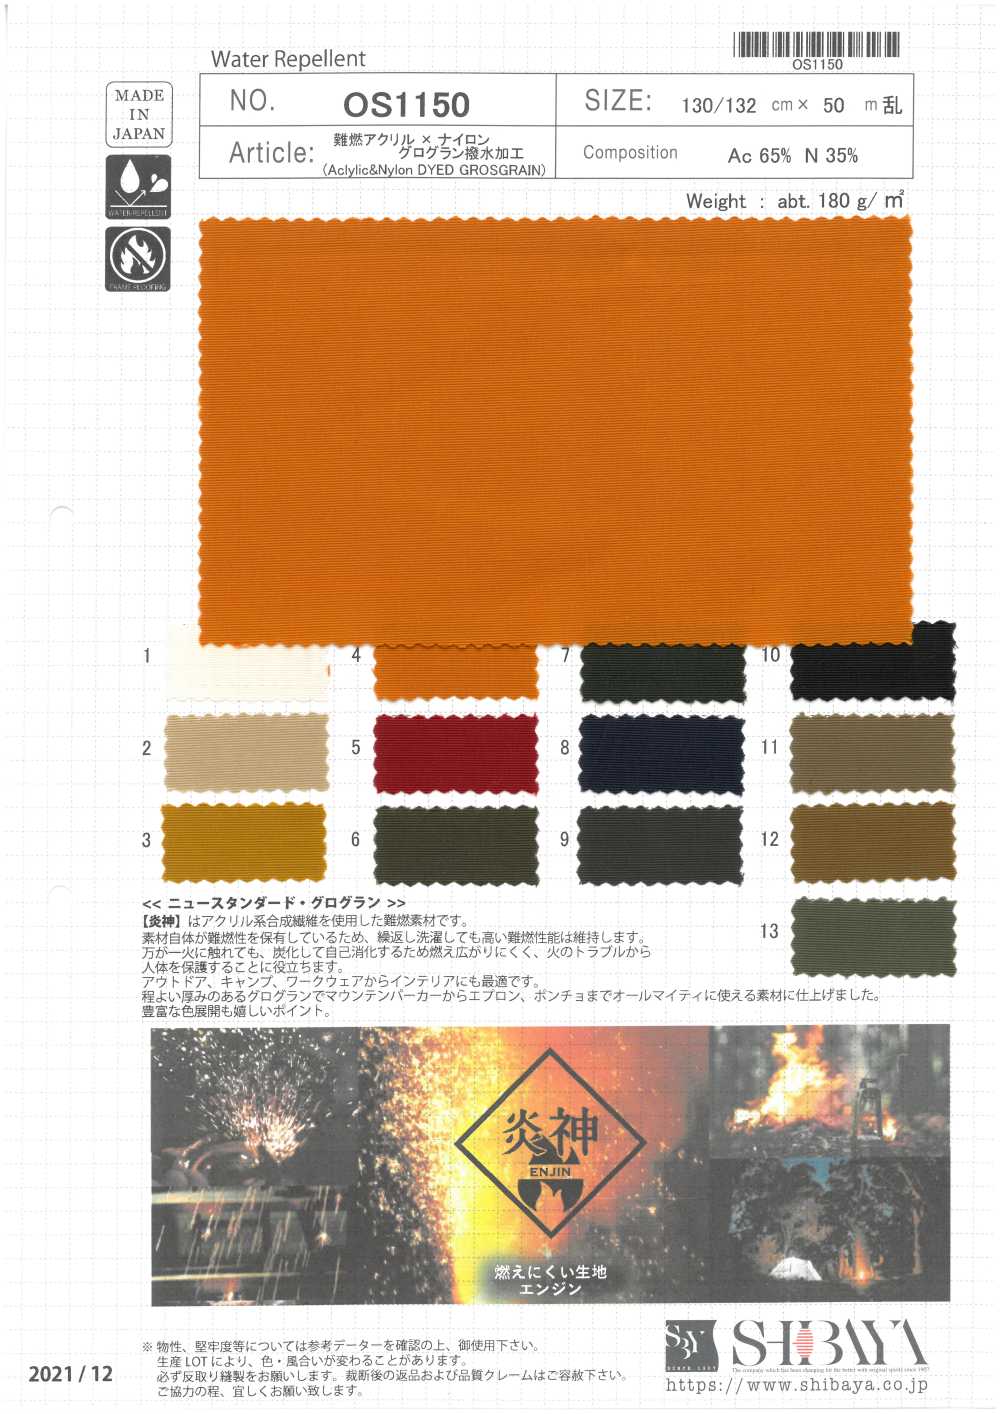 OS1150 Flame-retardant Acrylic X Nylon Grosgrain Water-repellent Finish[Textile / Fabric] SHIBAYA